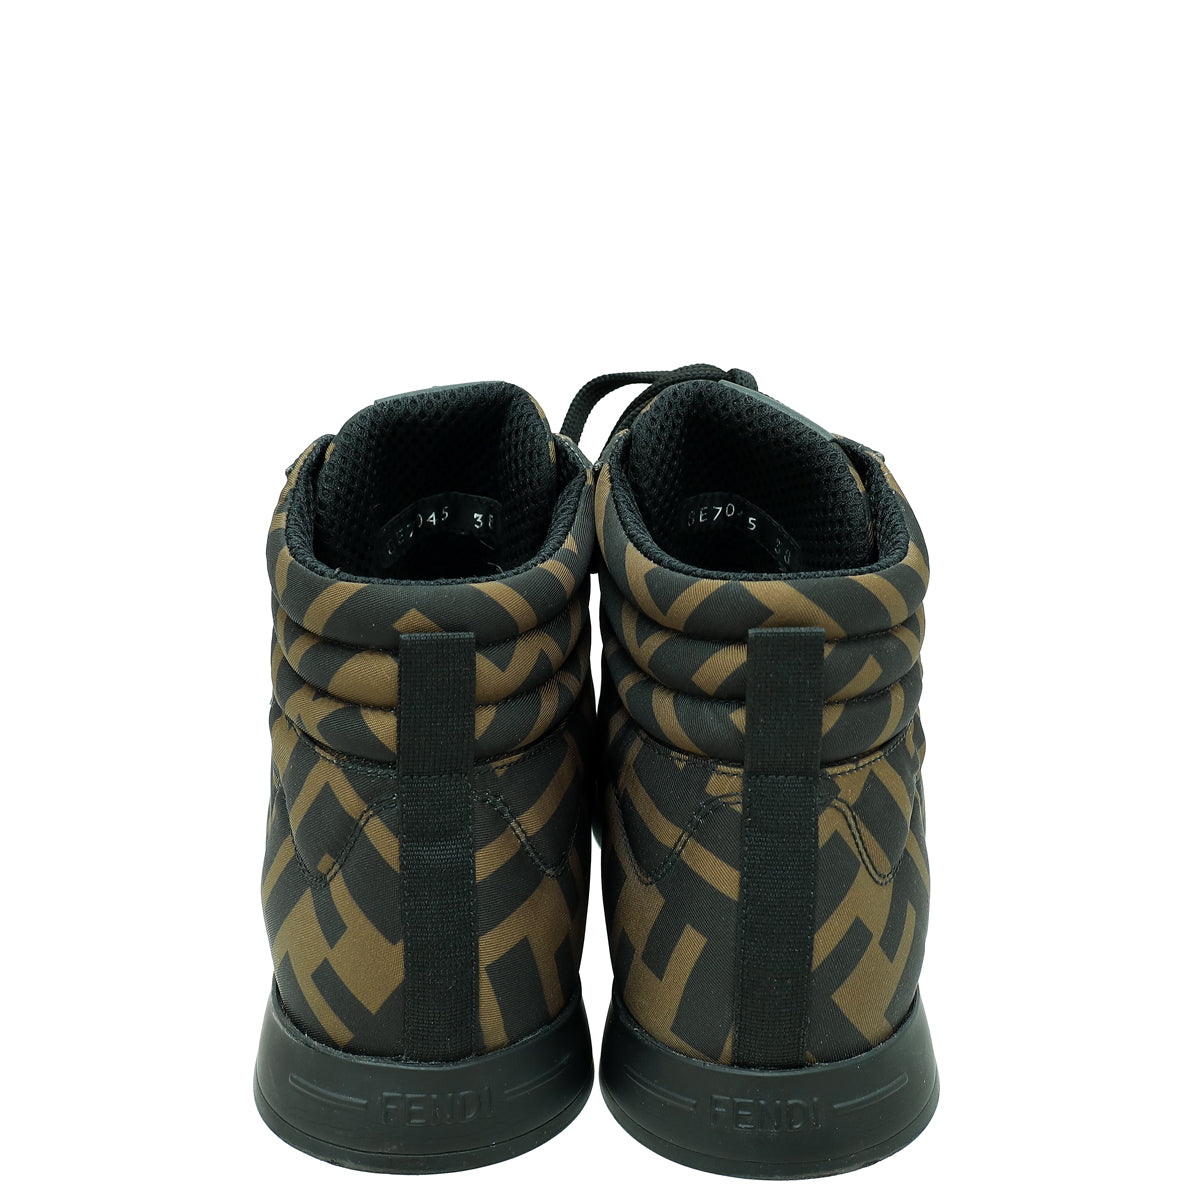 Fendi Bicolor FF Freedom Ankle Sneaker 38